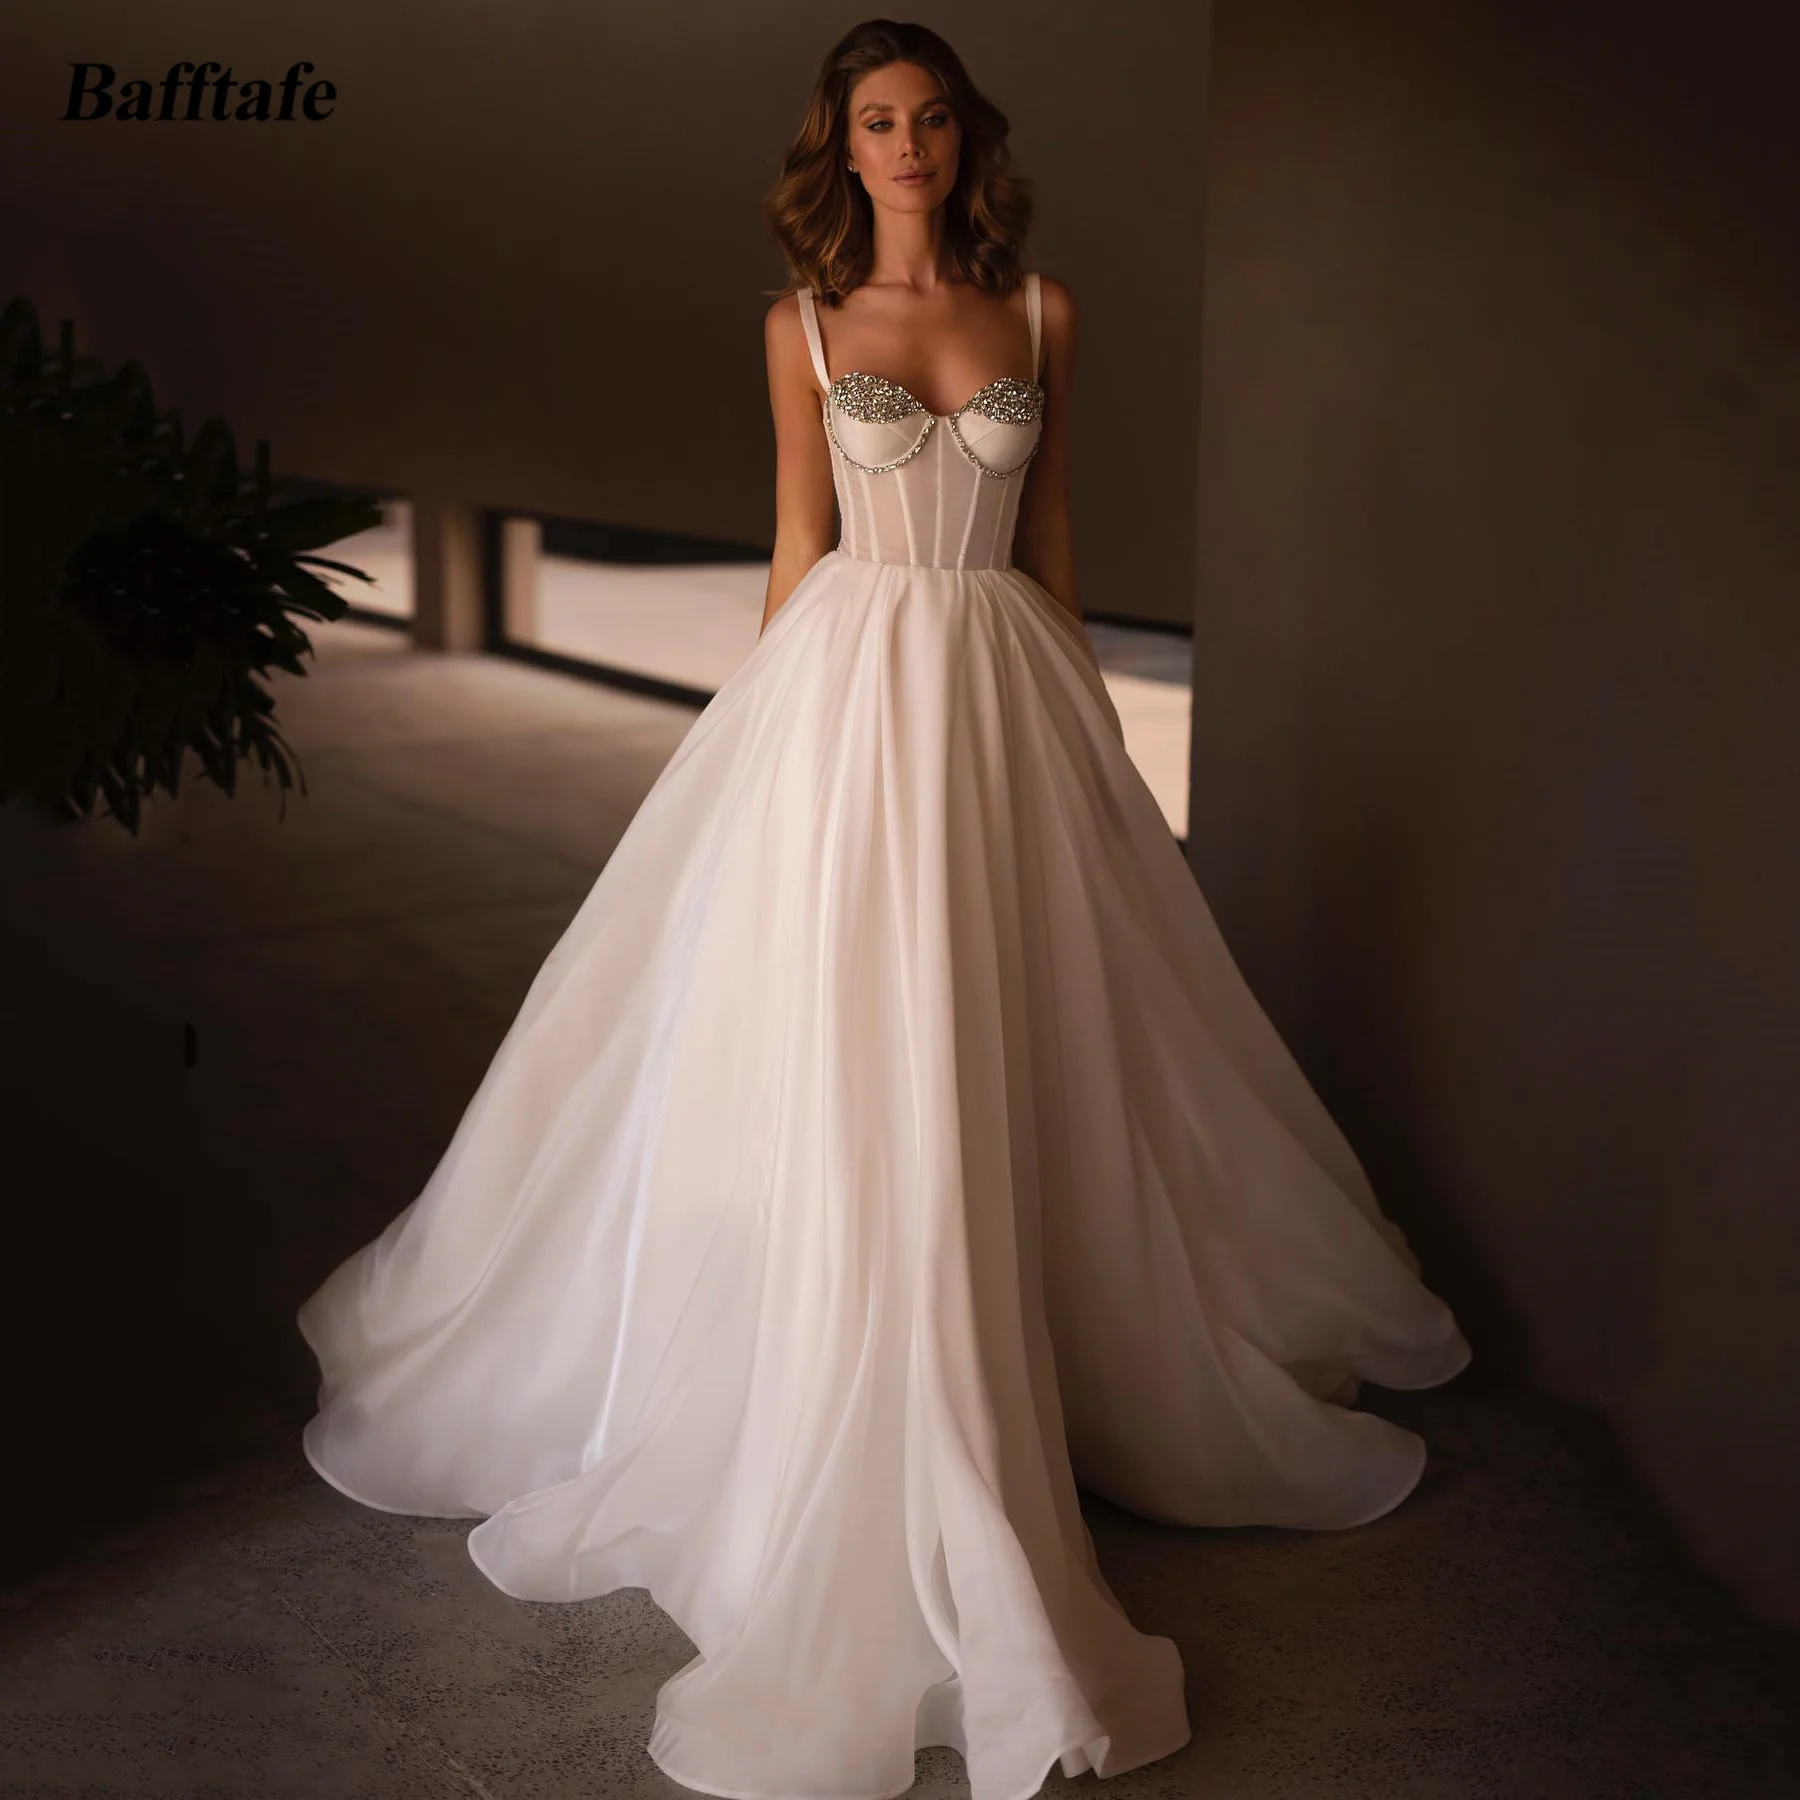 

Bafftafe A Line Organza Wedding Dresses Crystals Transparent Fitted Bones Bride Dress Wedding Photo Shoot Bridal Party Gowns